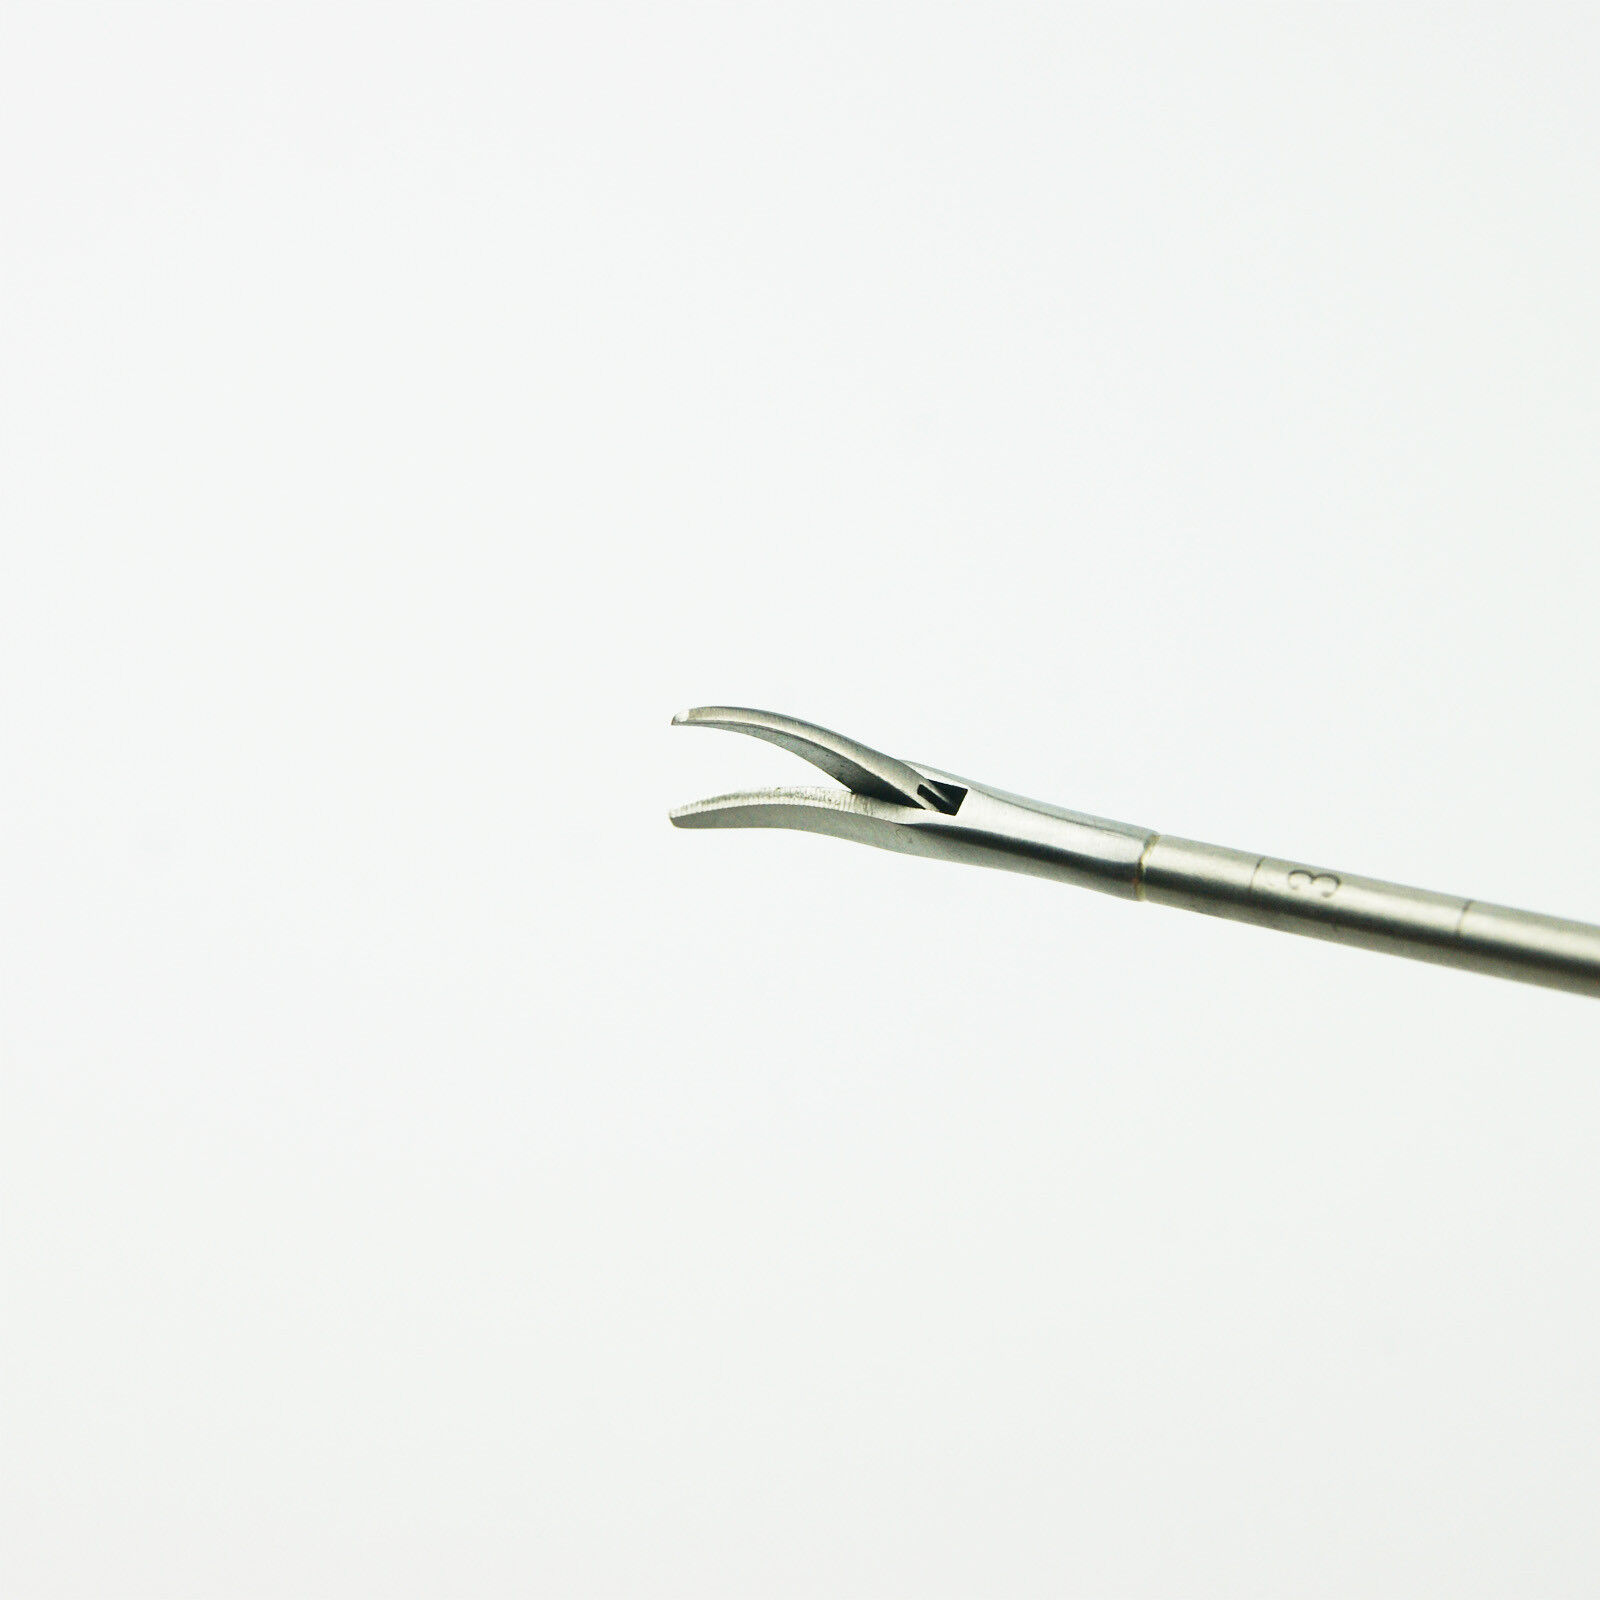 Nasal left curved tissue scissors